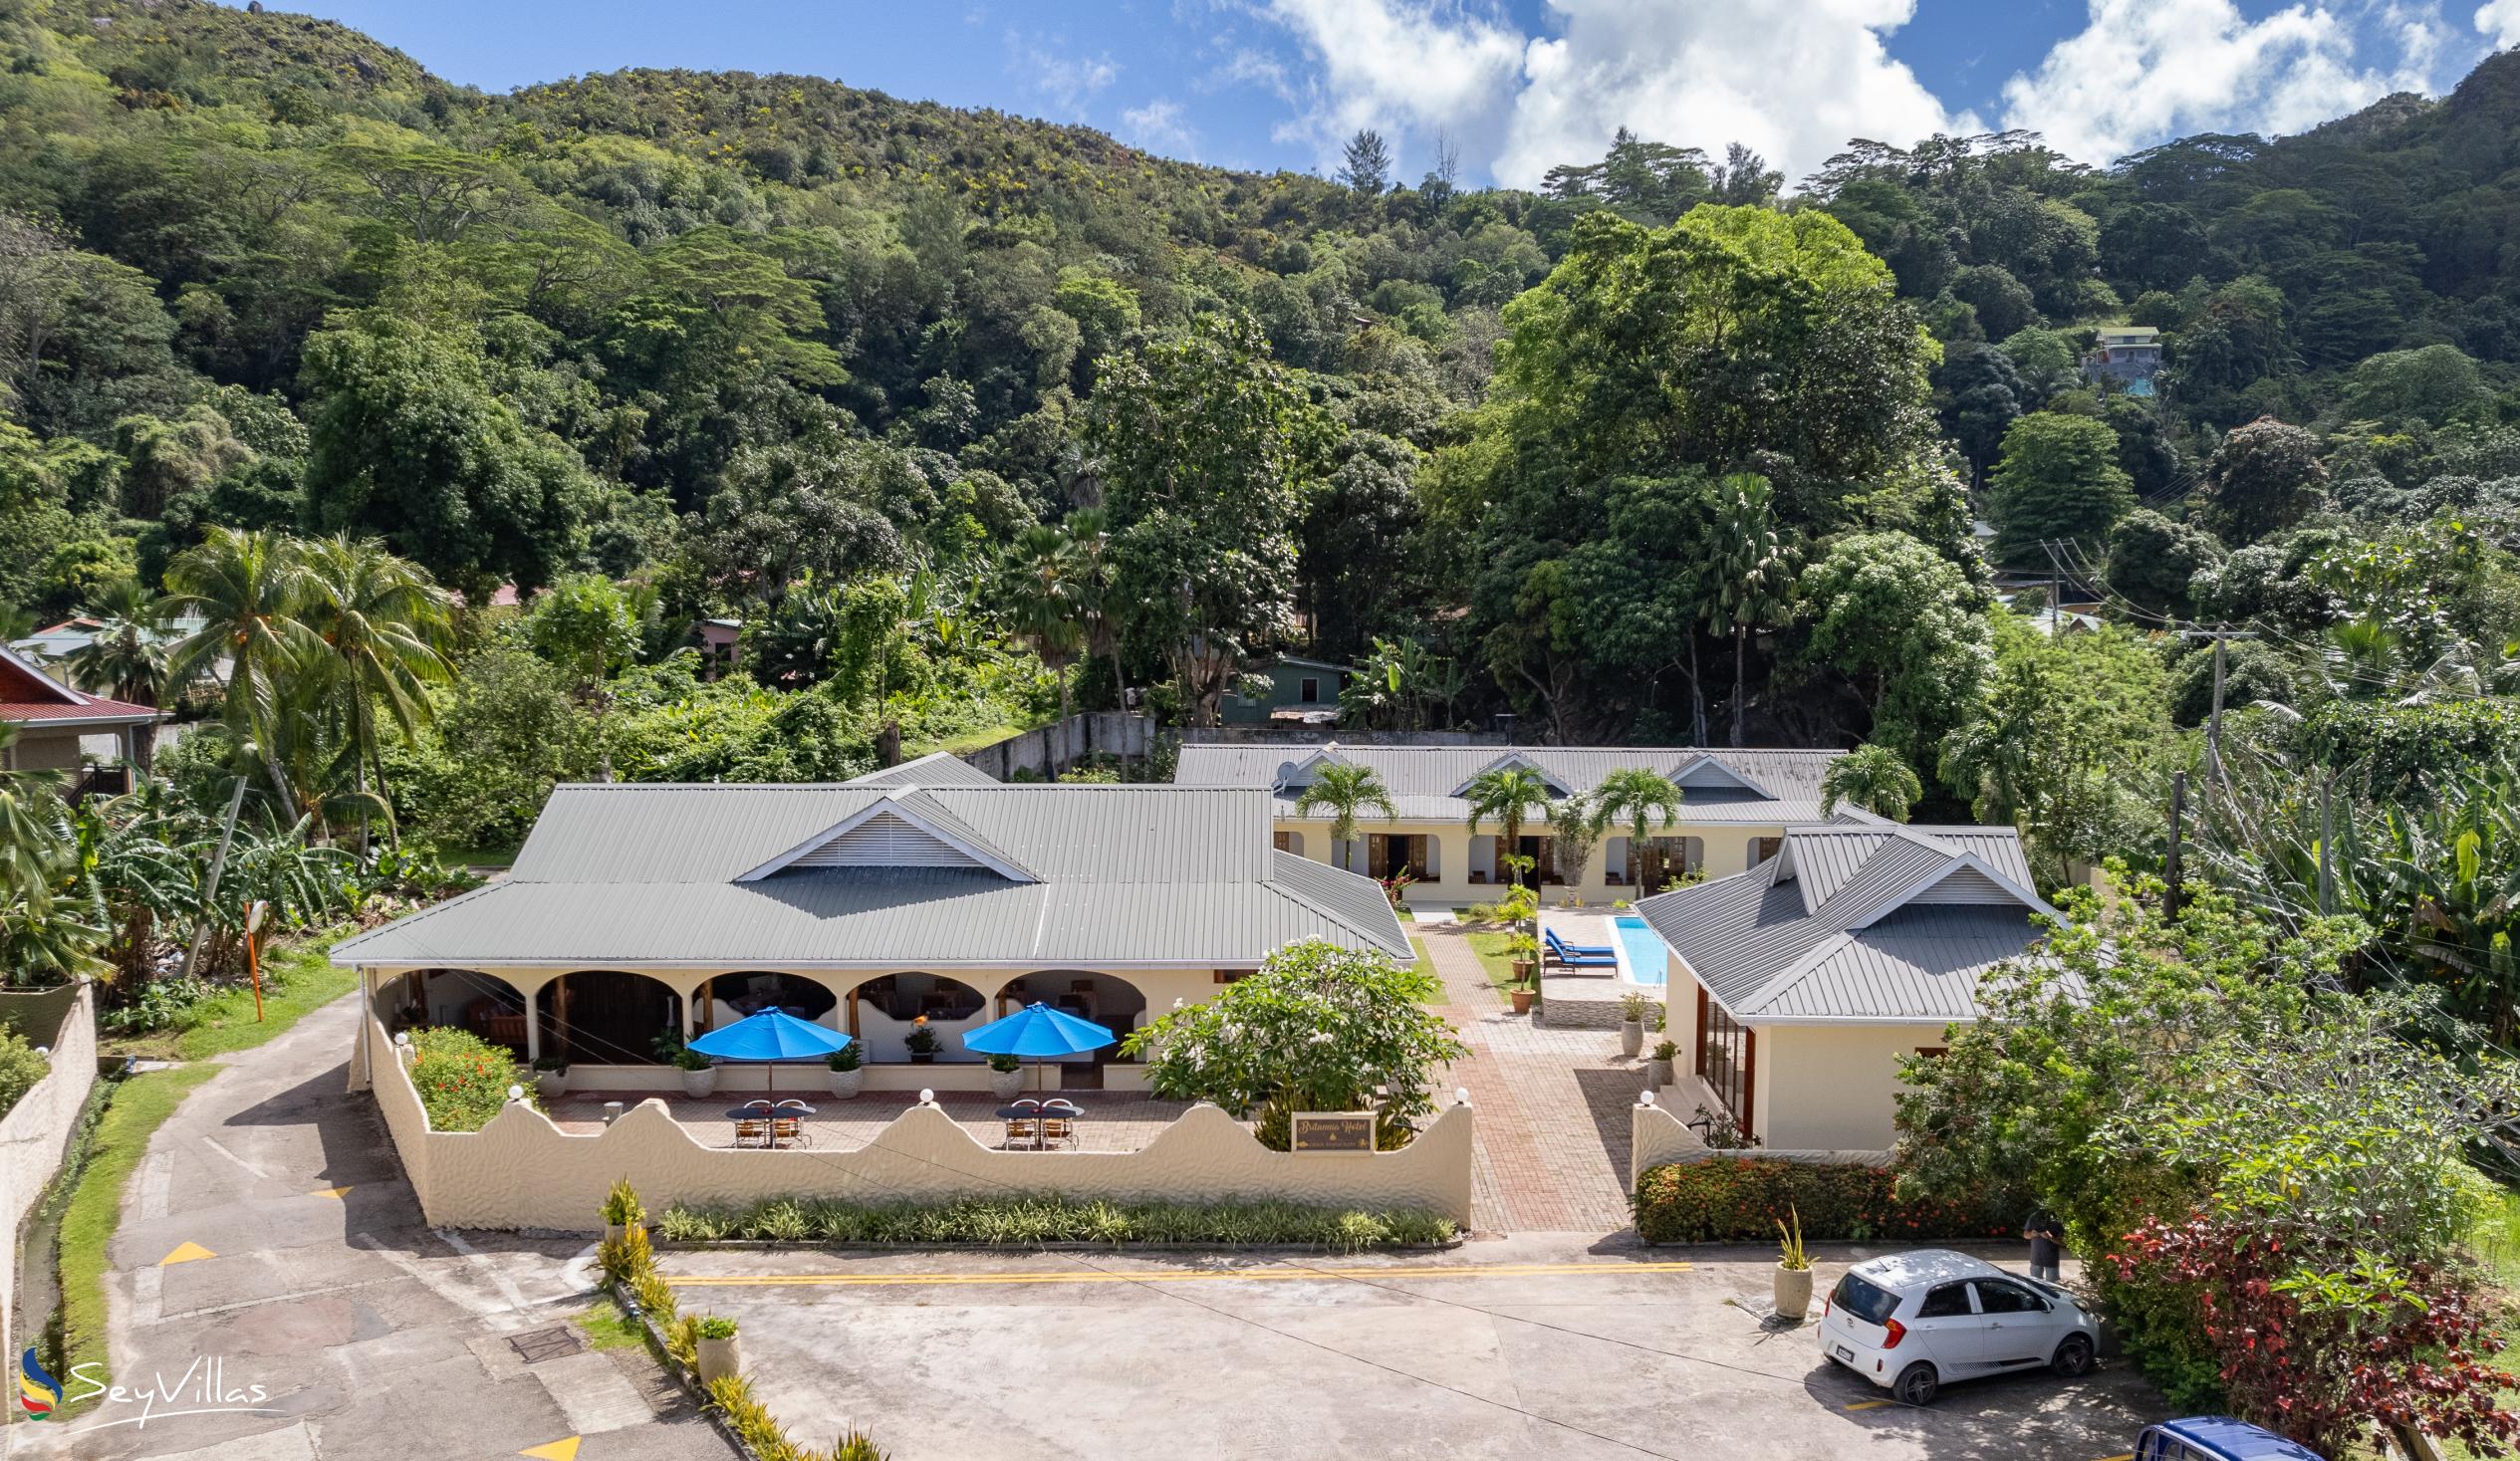 Foto 11: Britannia Hotel - Extérieur - Praslin (Seychelles)